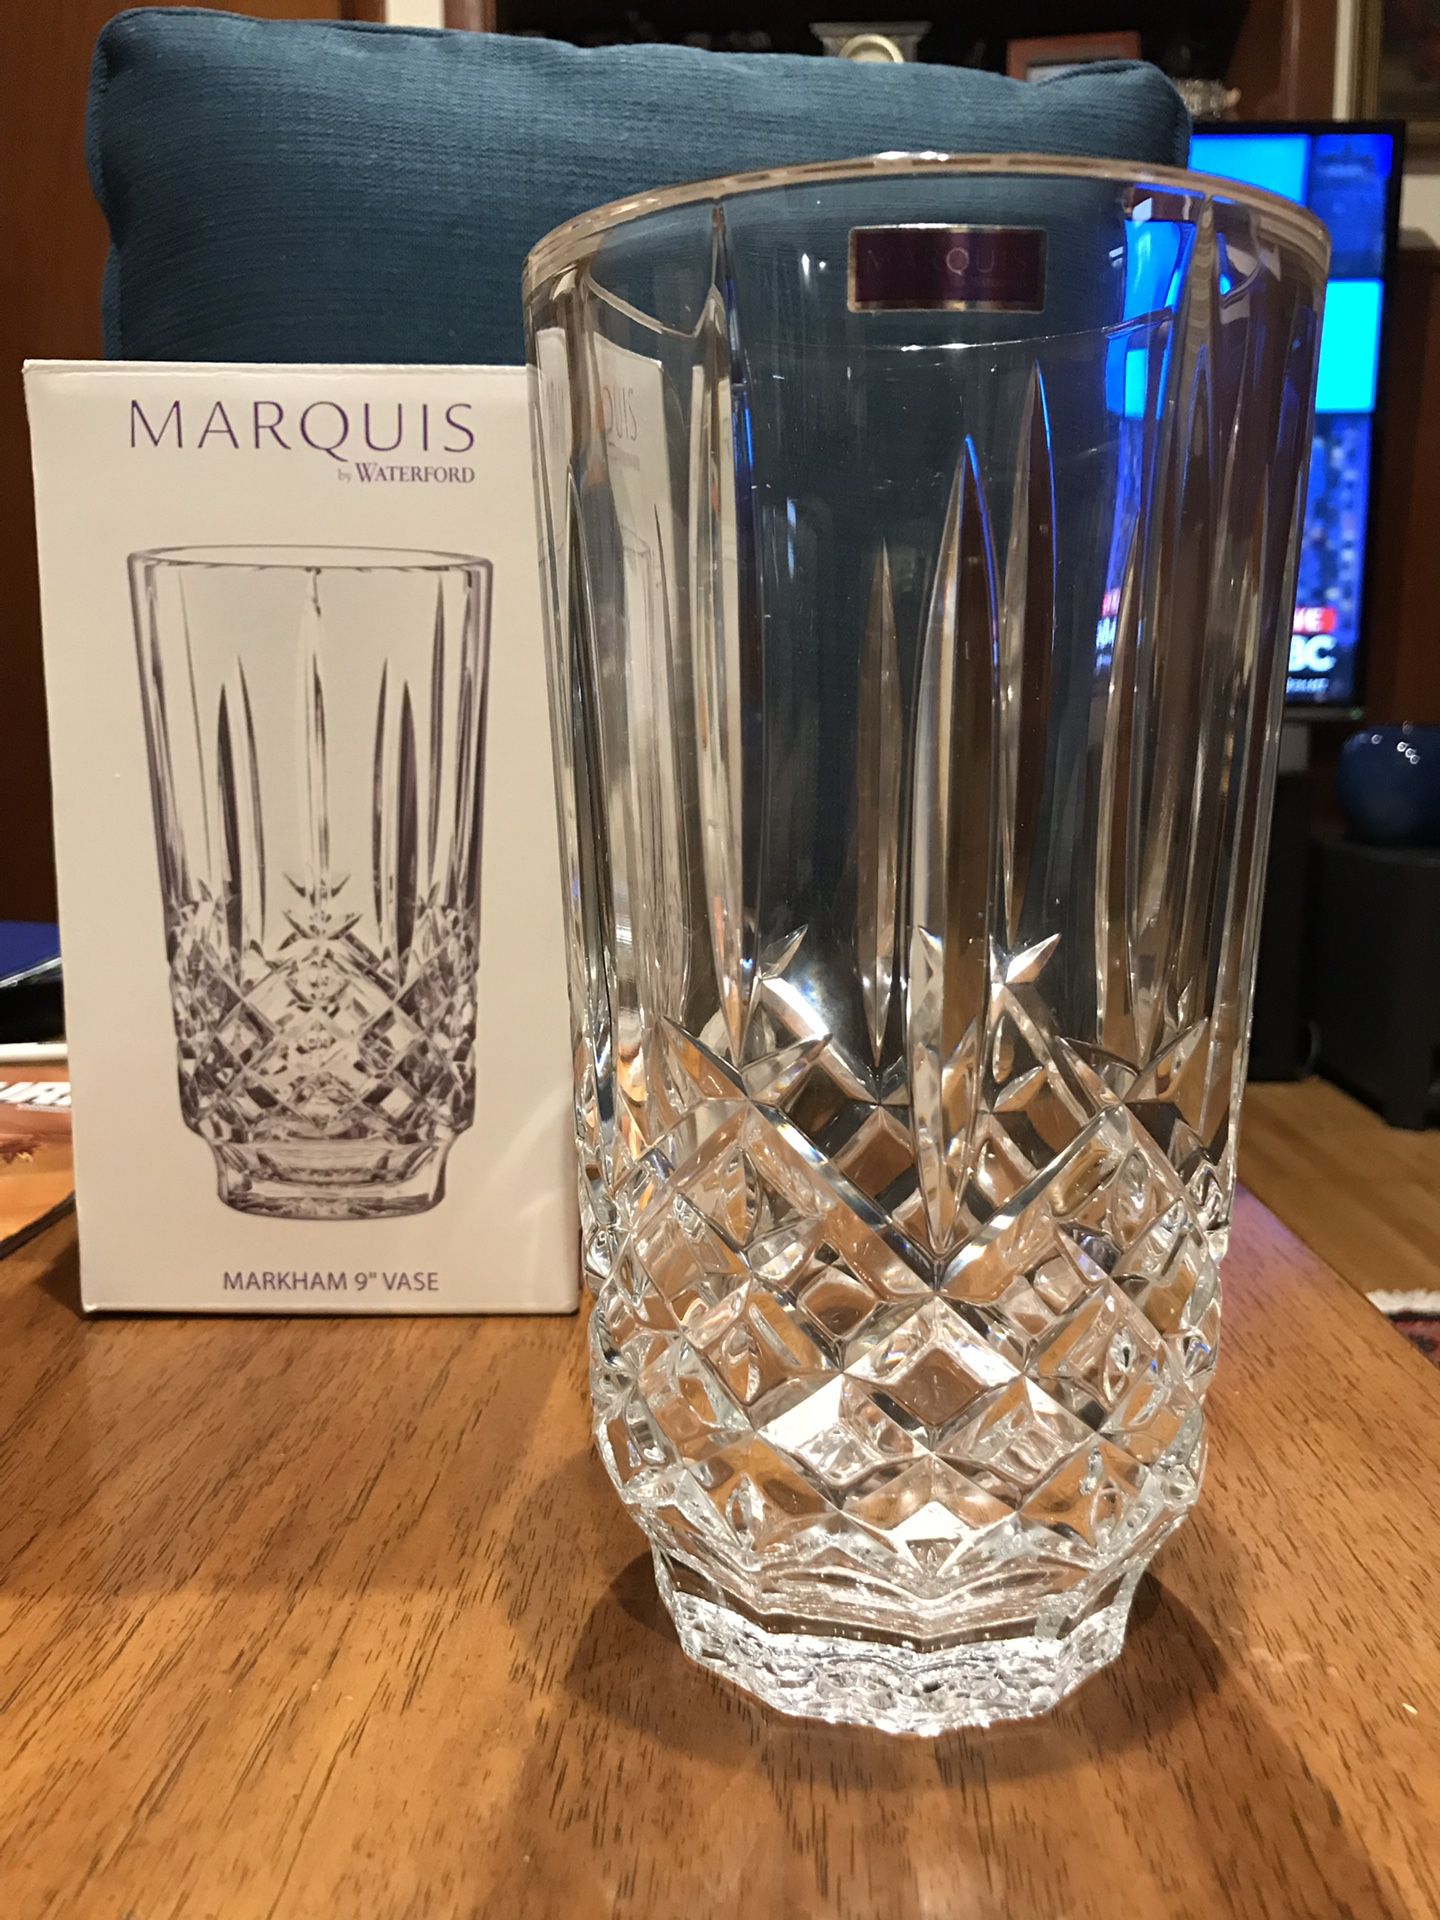 Waterford Marquis Markham 9”vase brand new